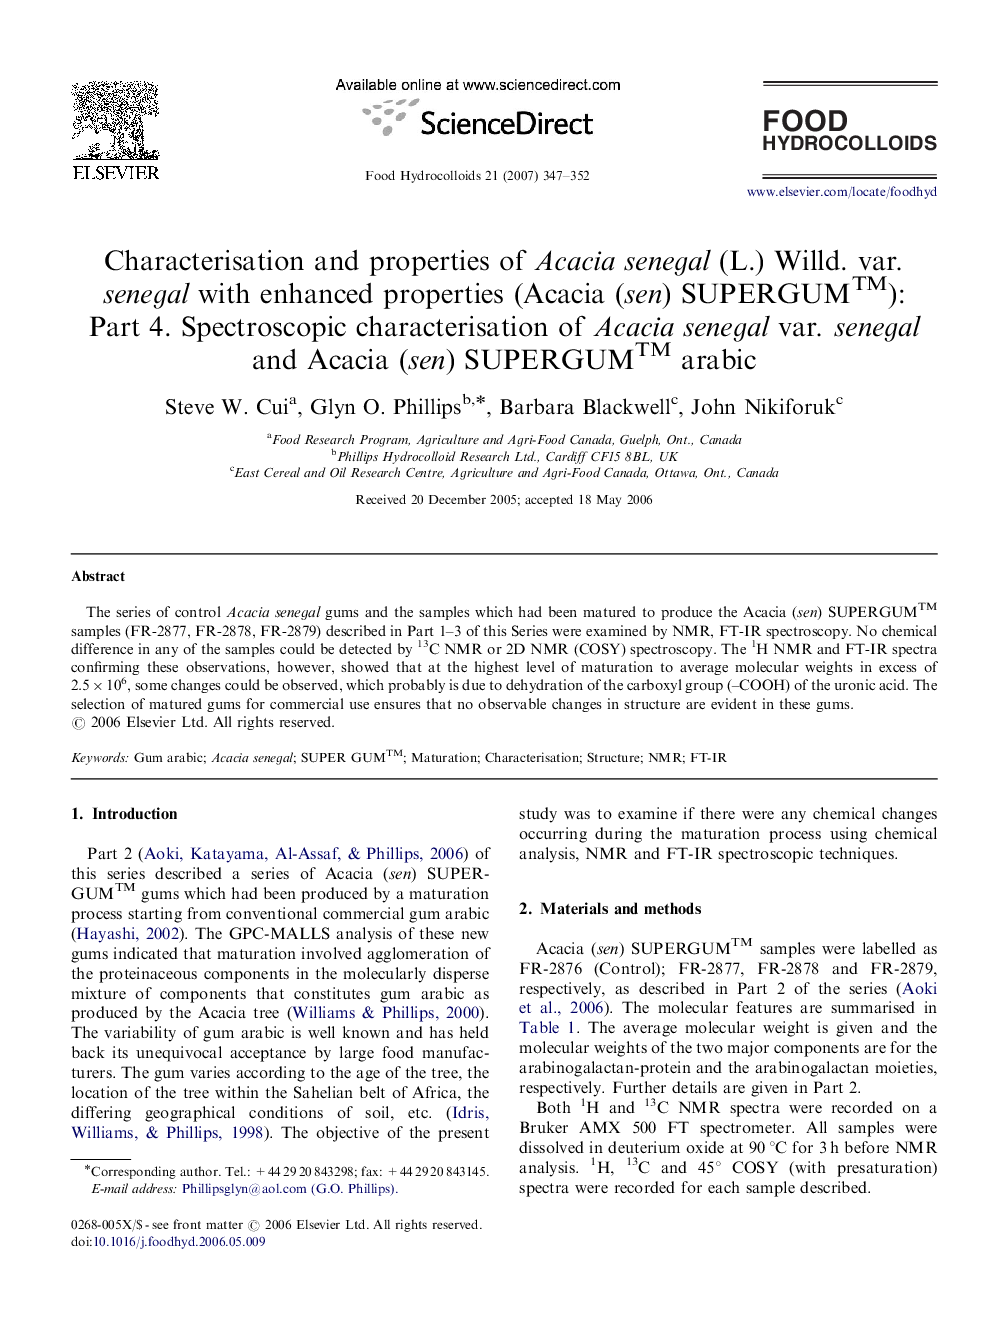 Characterisation and properties of Acacia senegal (L.) Willd. var. senegal with enhanced properties (Acacia (sen) SUPERGUM™): Part 4. Spectroscopic characterisation of Acacia senegal var. senegal and Acacia (sen) SUPERGUM™ arabic